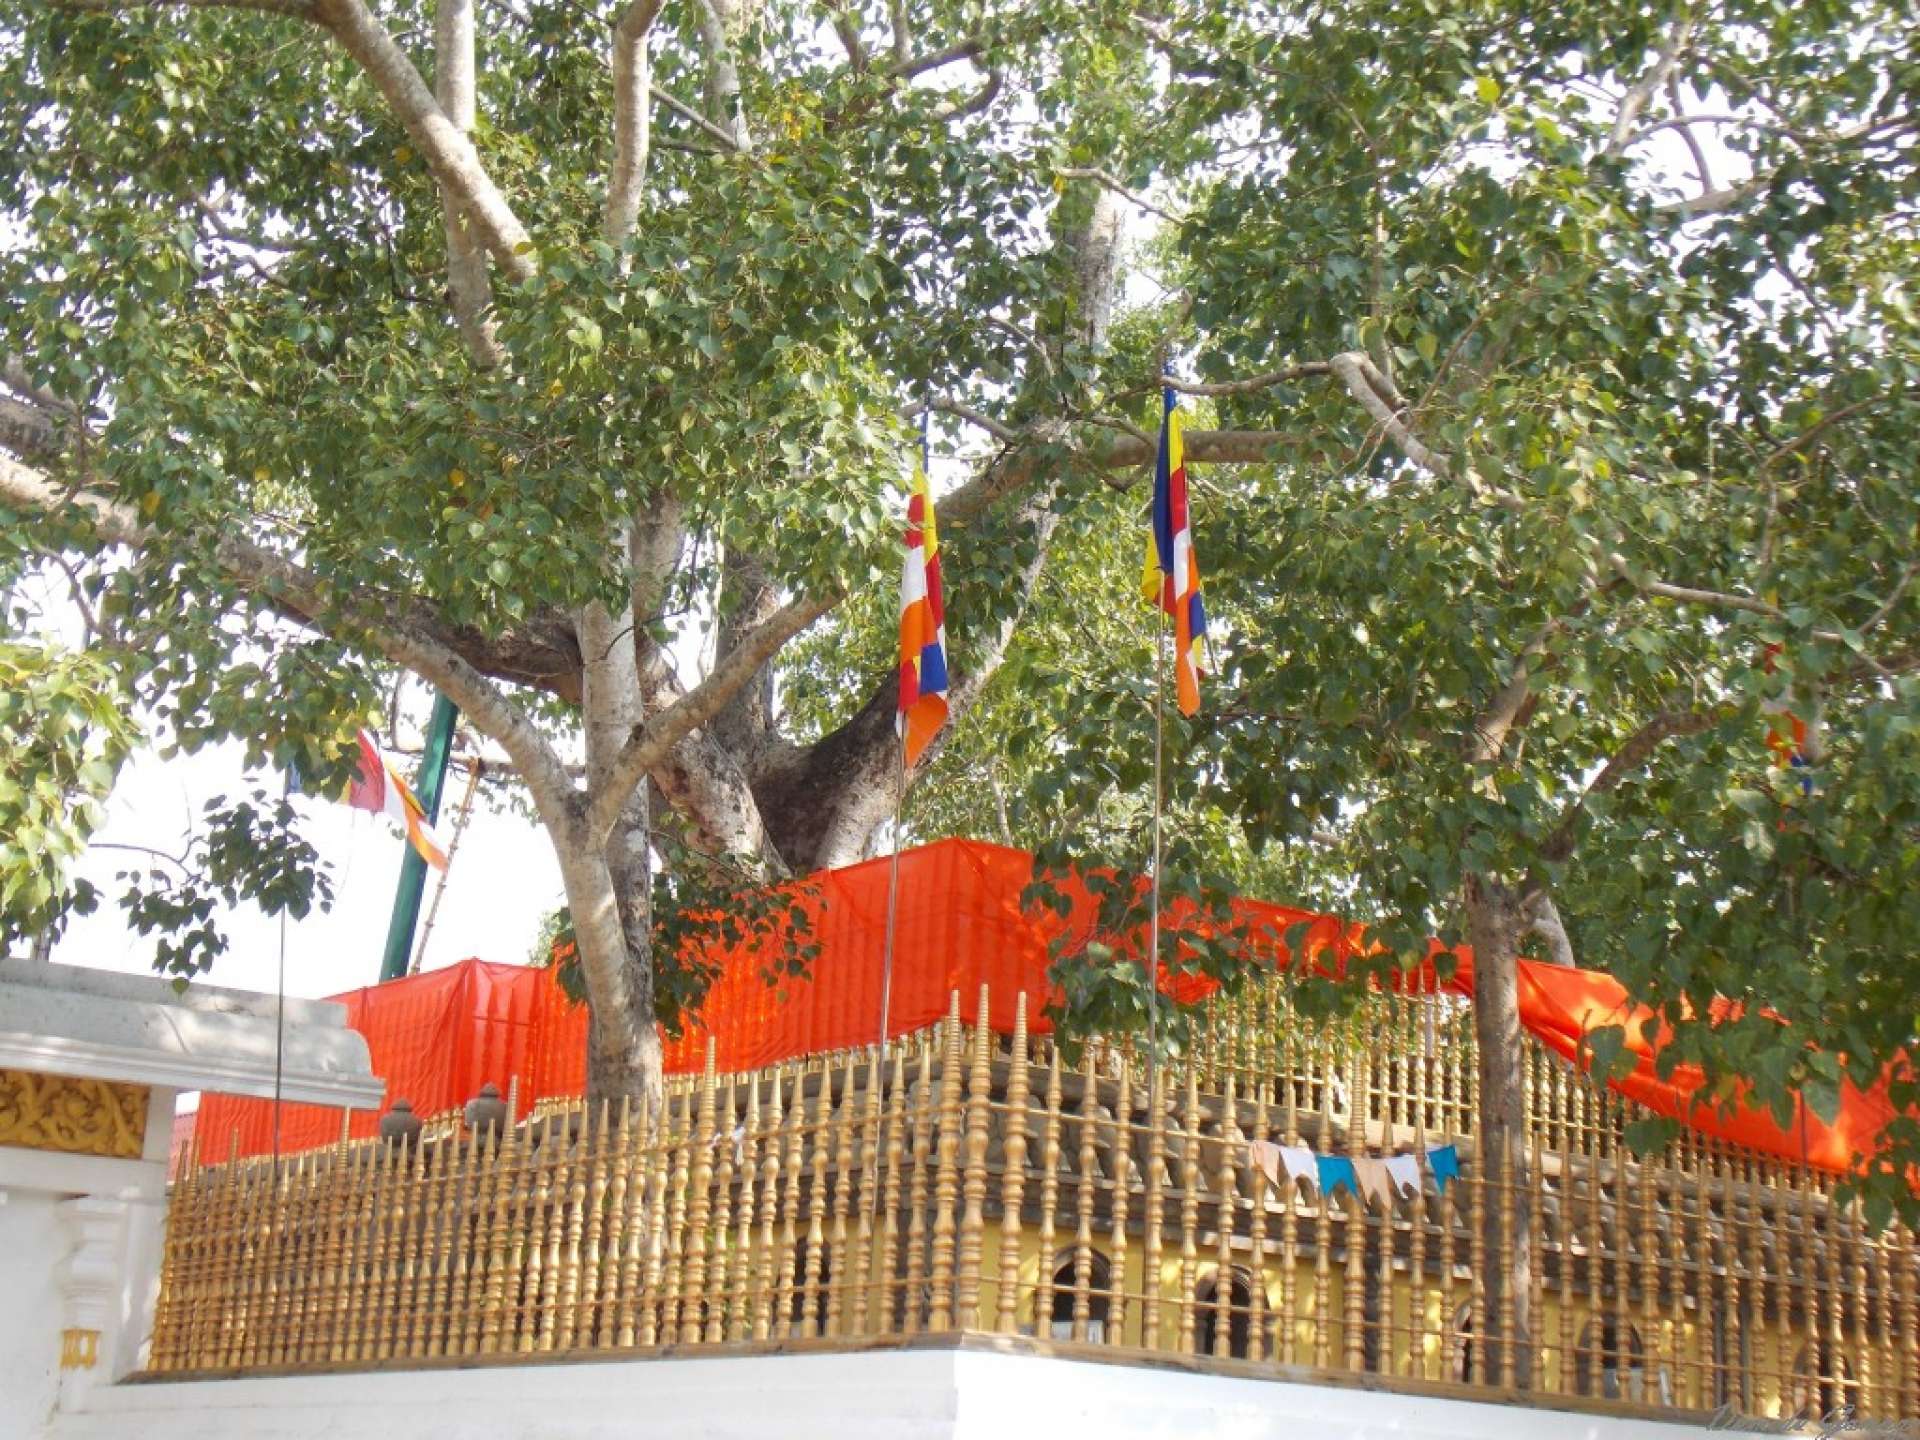 Jaya Sri Maha Bodhi in Anuradhapura